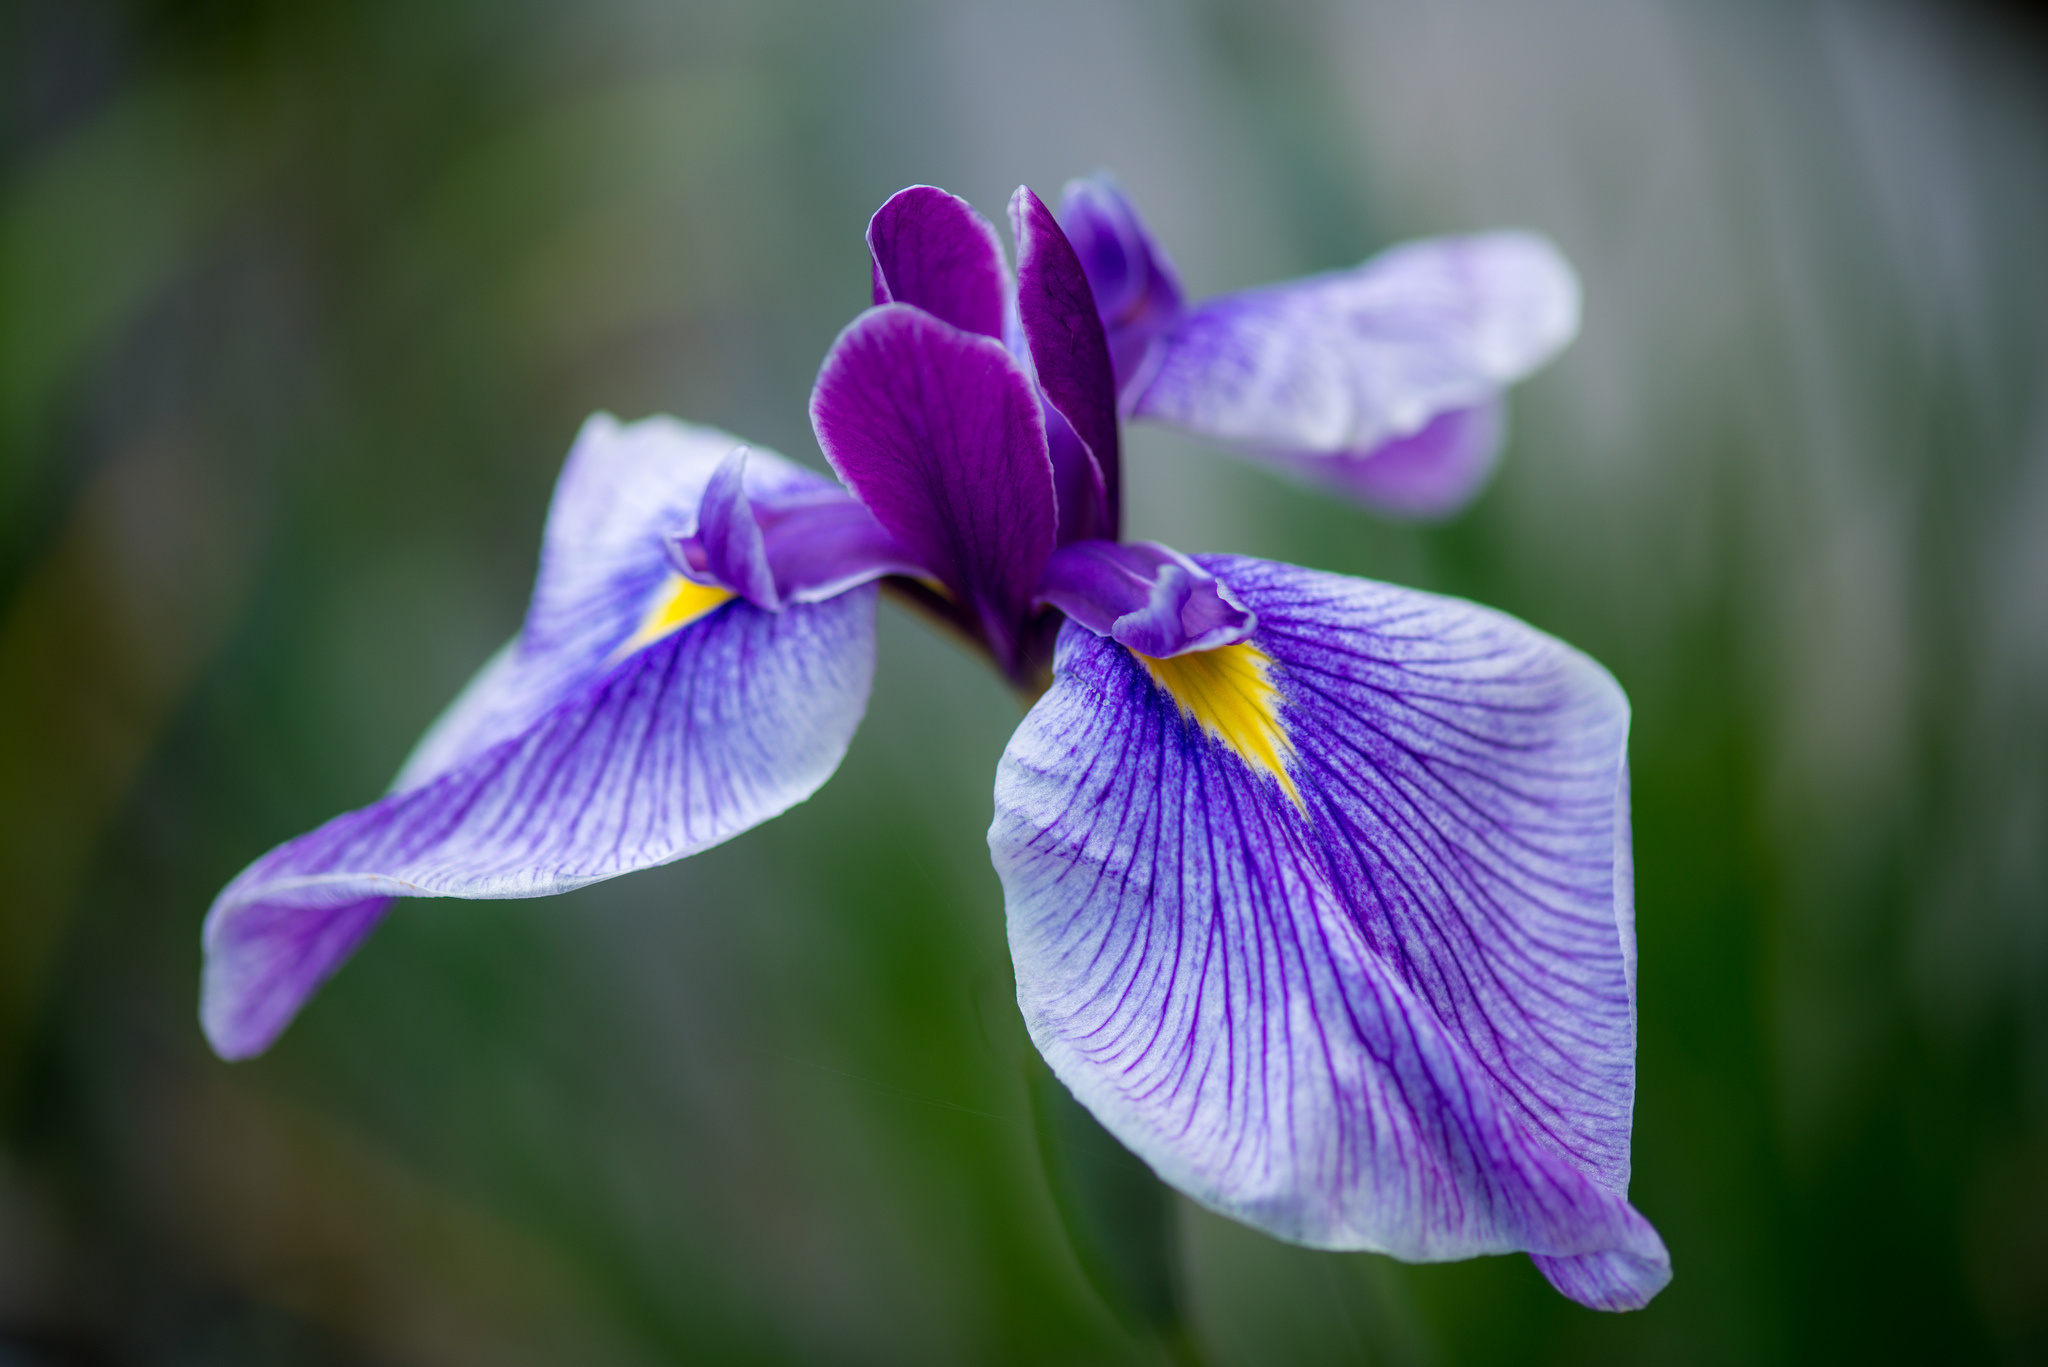 308944 descargar imagen tierra/naturaleza, iris, flores: fondos de pantalla y protectores de pantalla gratis